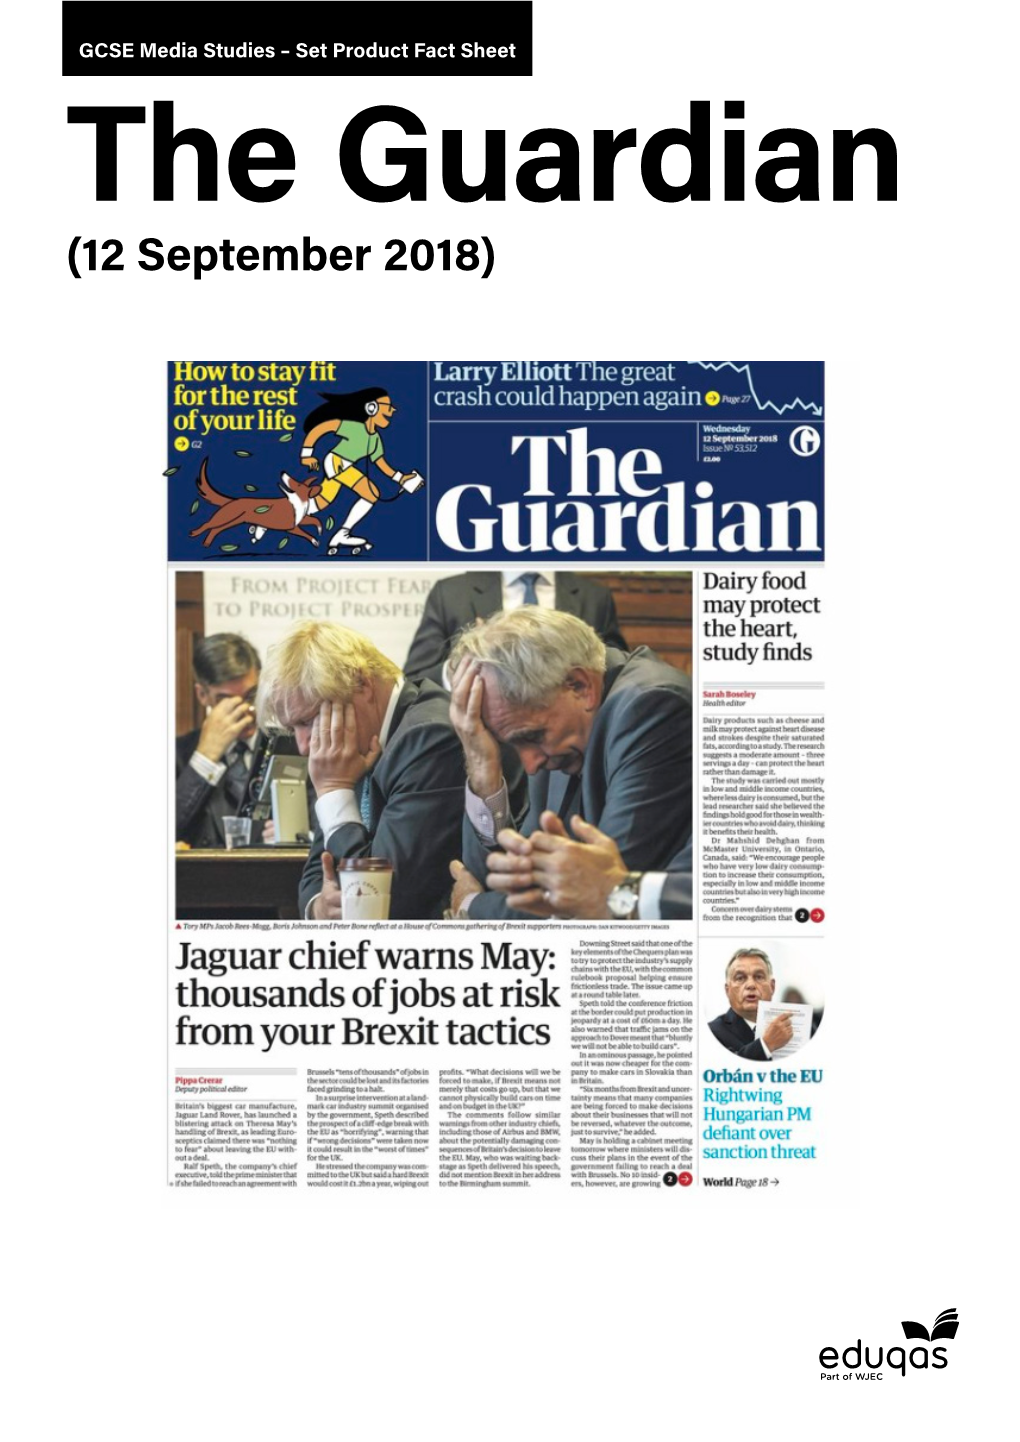 12 September 2018) GCSE Media Studies – Set Product Fact Sheet the Guardian (12Th September 2018